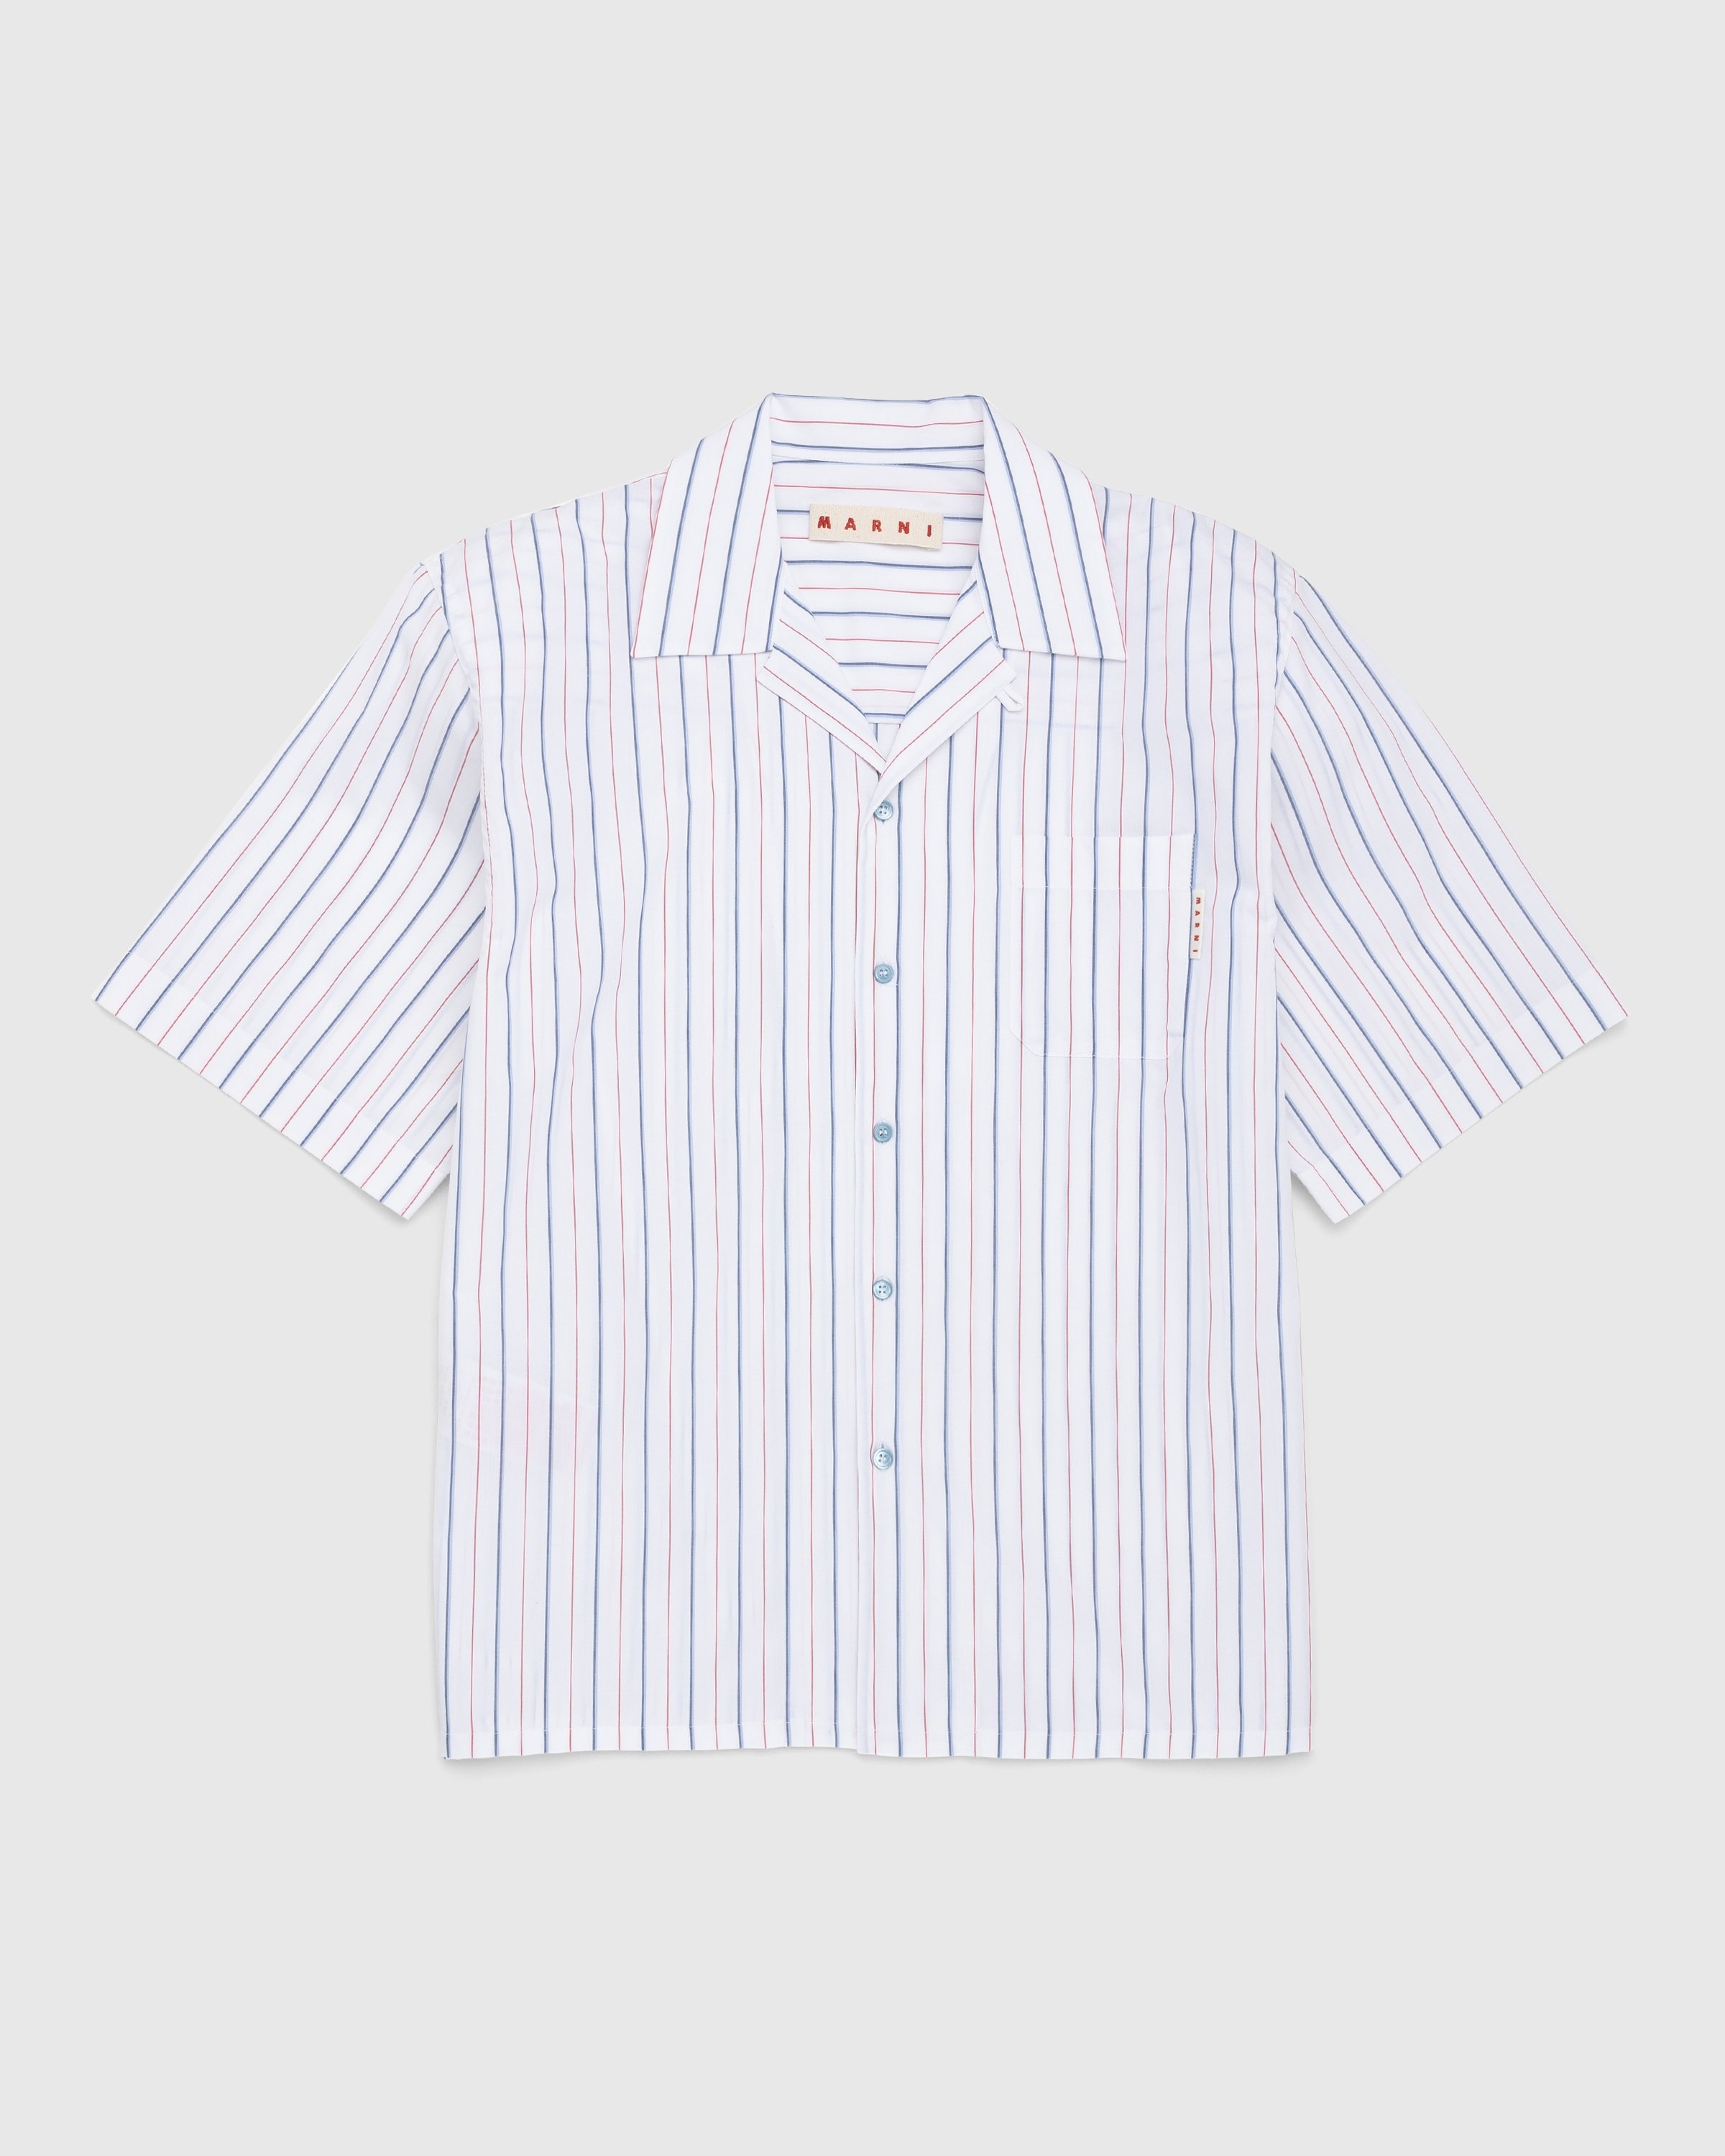 Marni – Striped Button-Up Shirt White - Shirts - White - Image 1